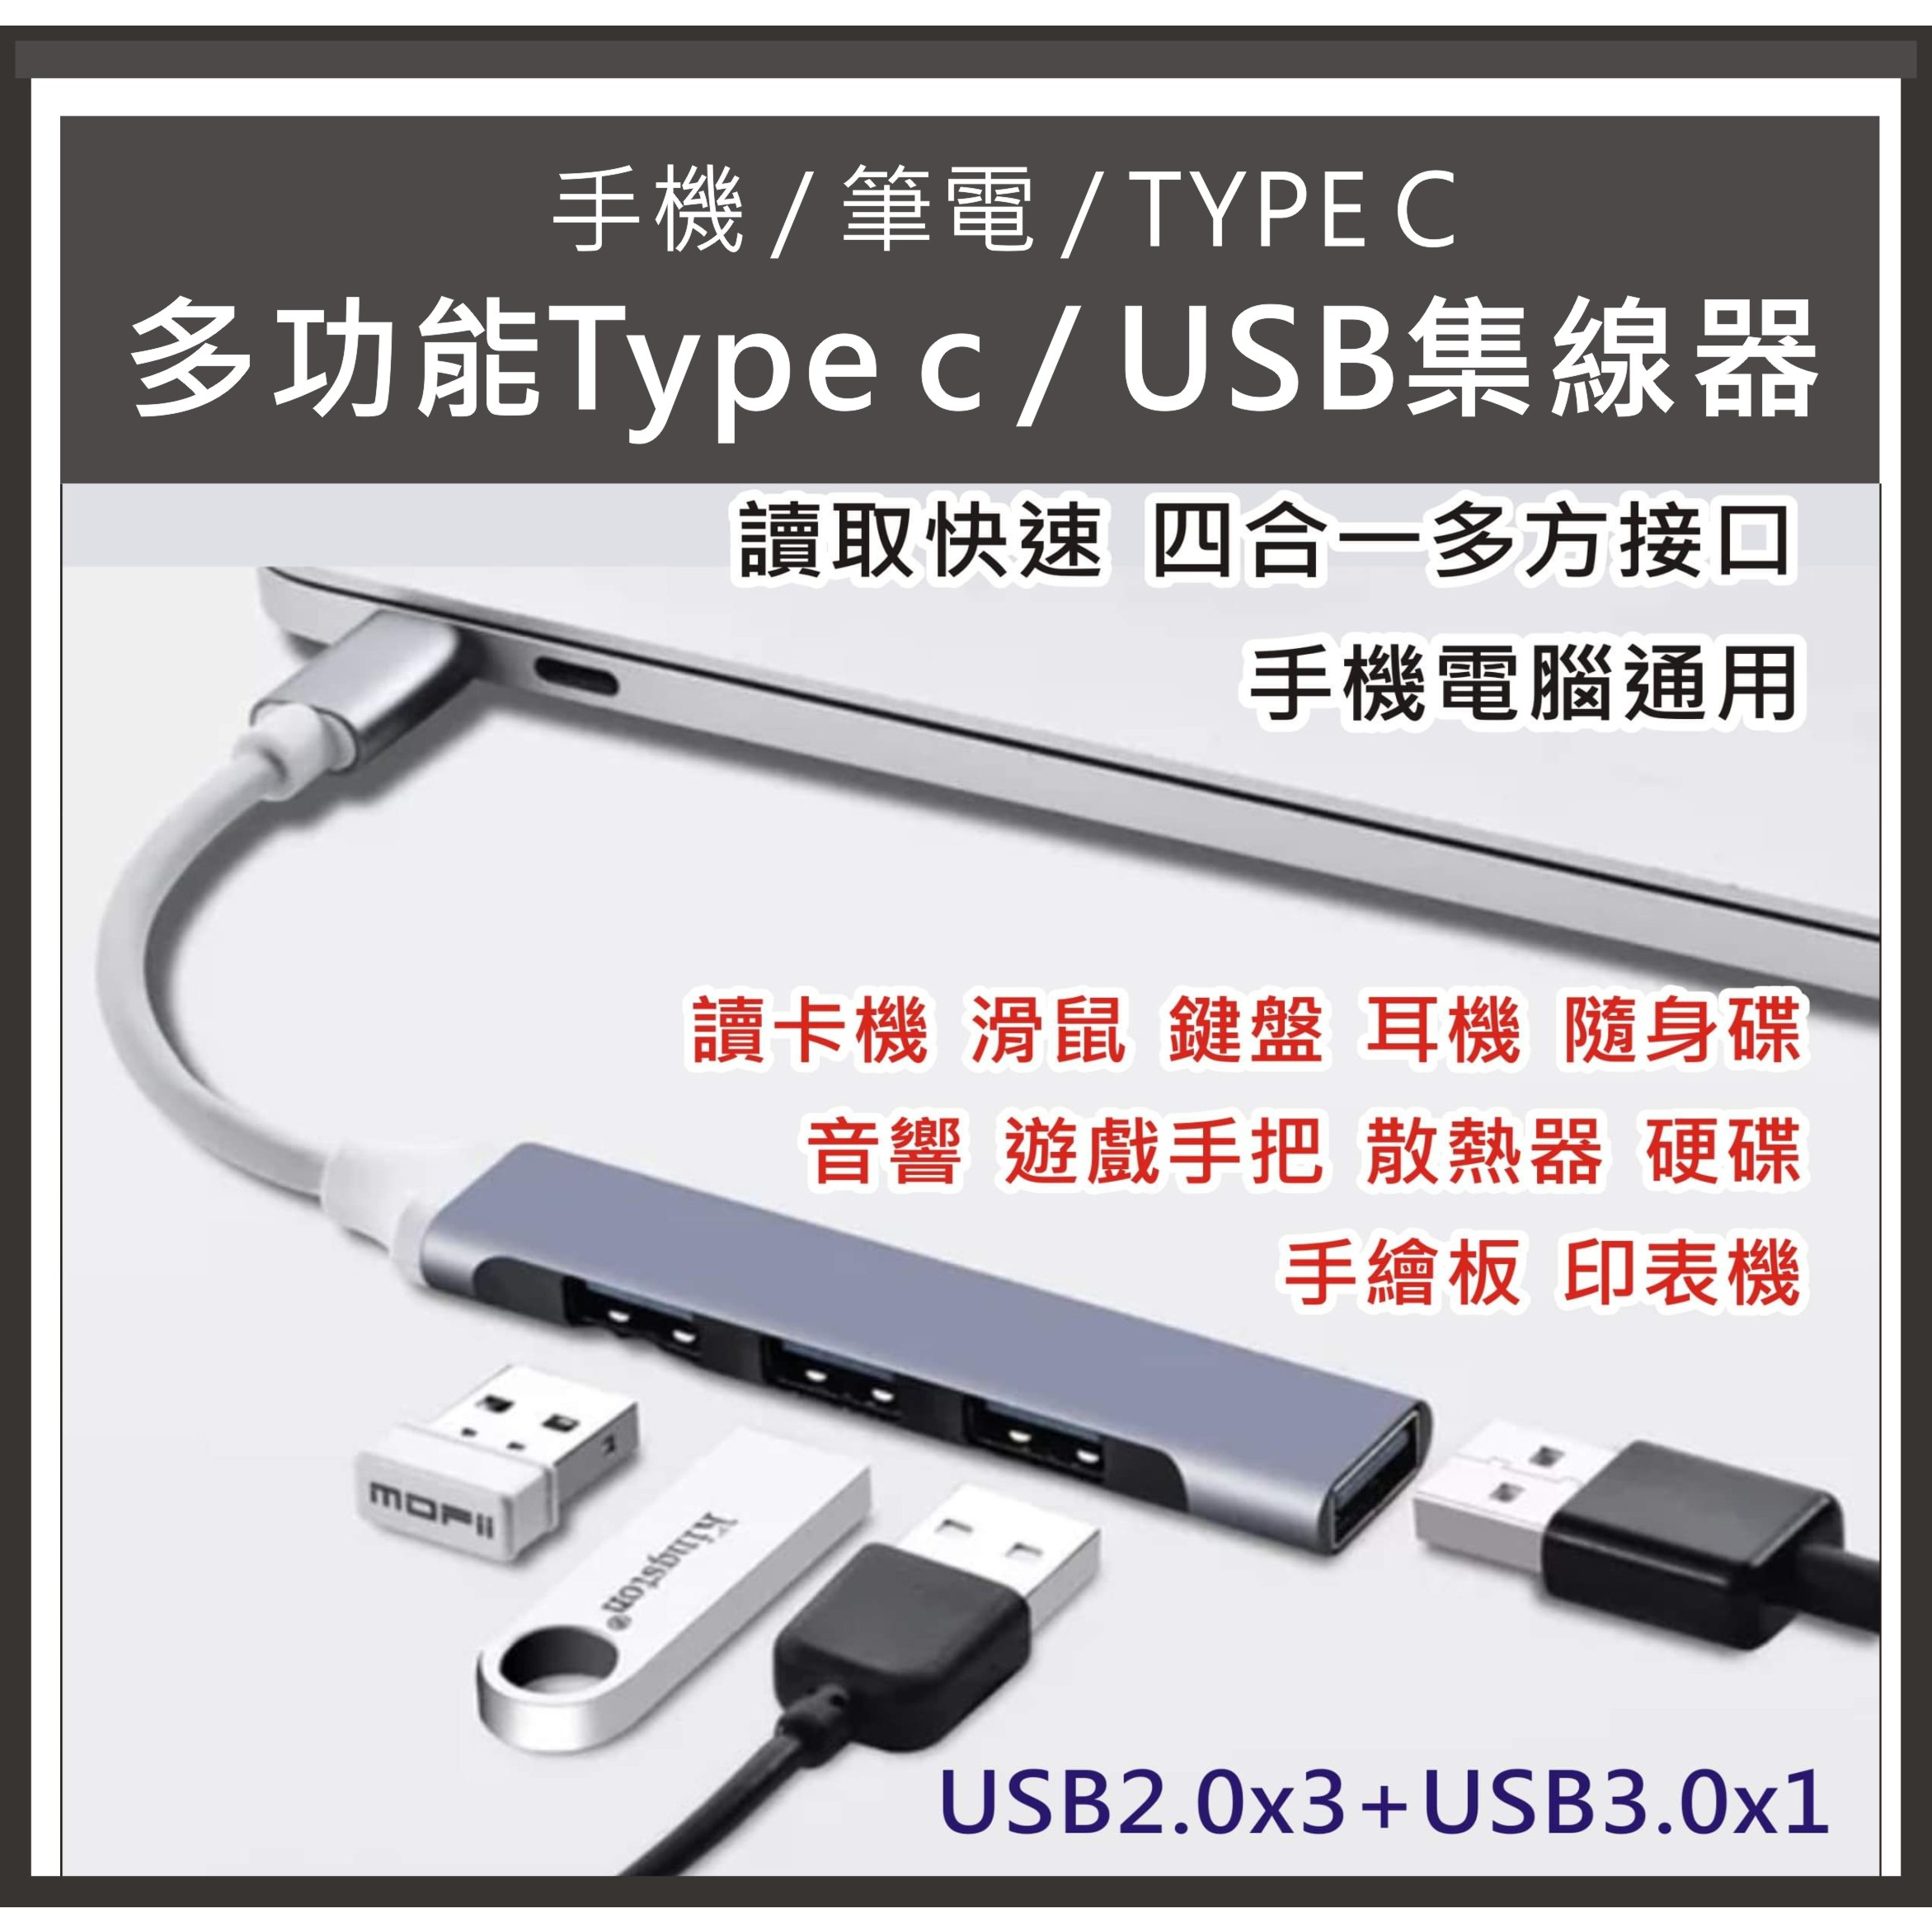 Type c 轉接器 擴展器 擴展塢 usb擴充器 集線器 拓展器 hub type- OTG usb3.0 2.0